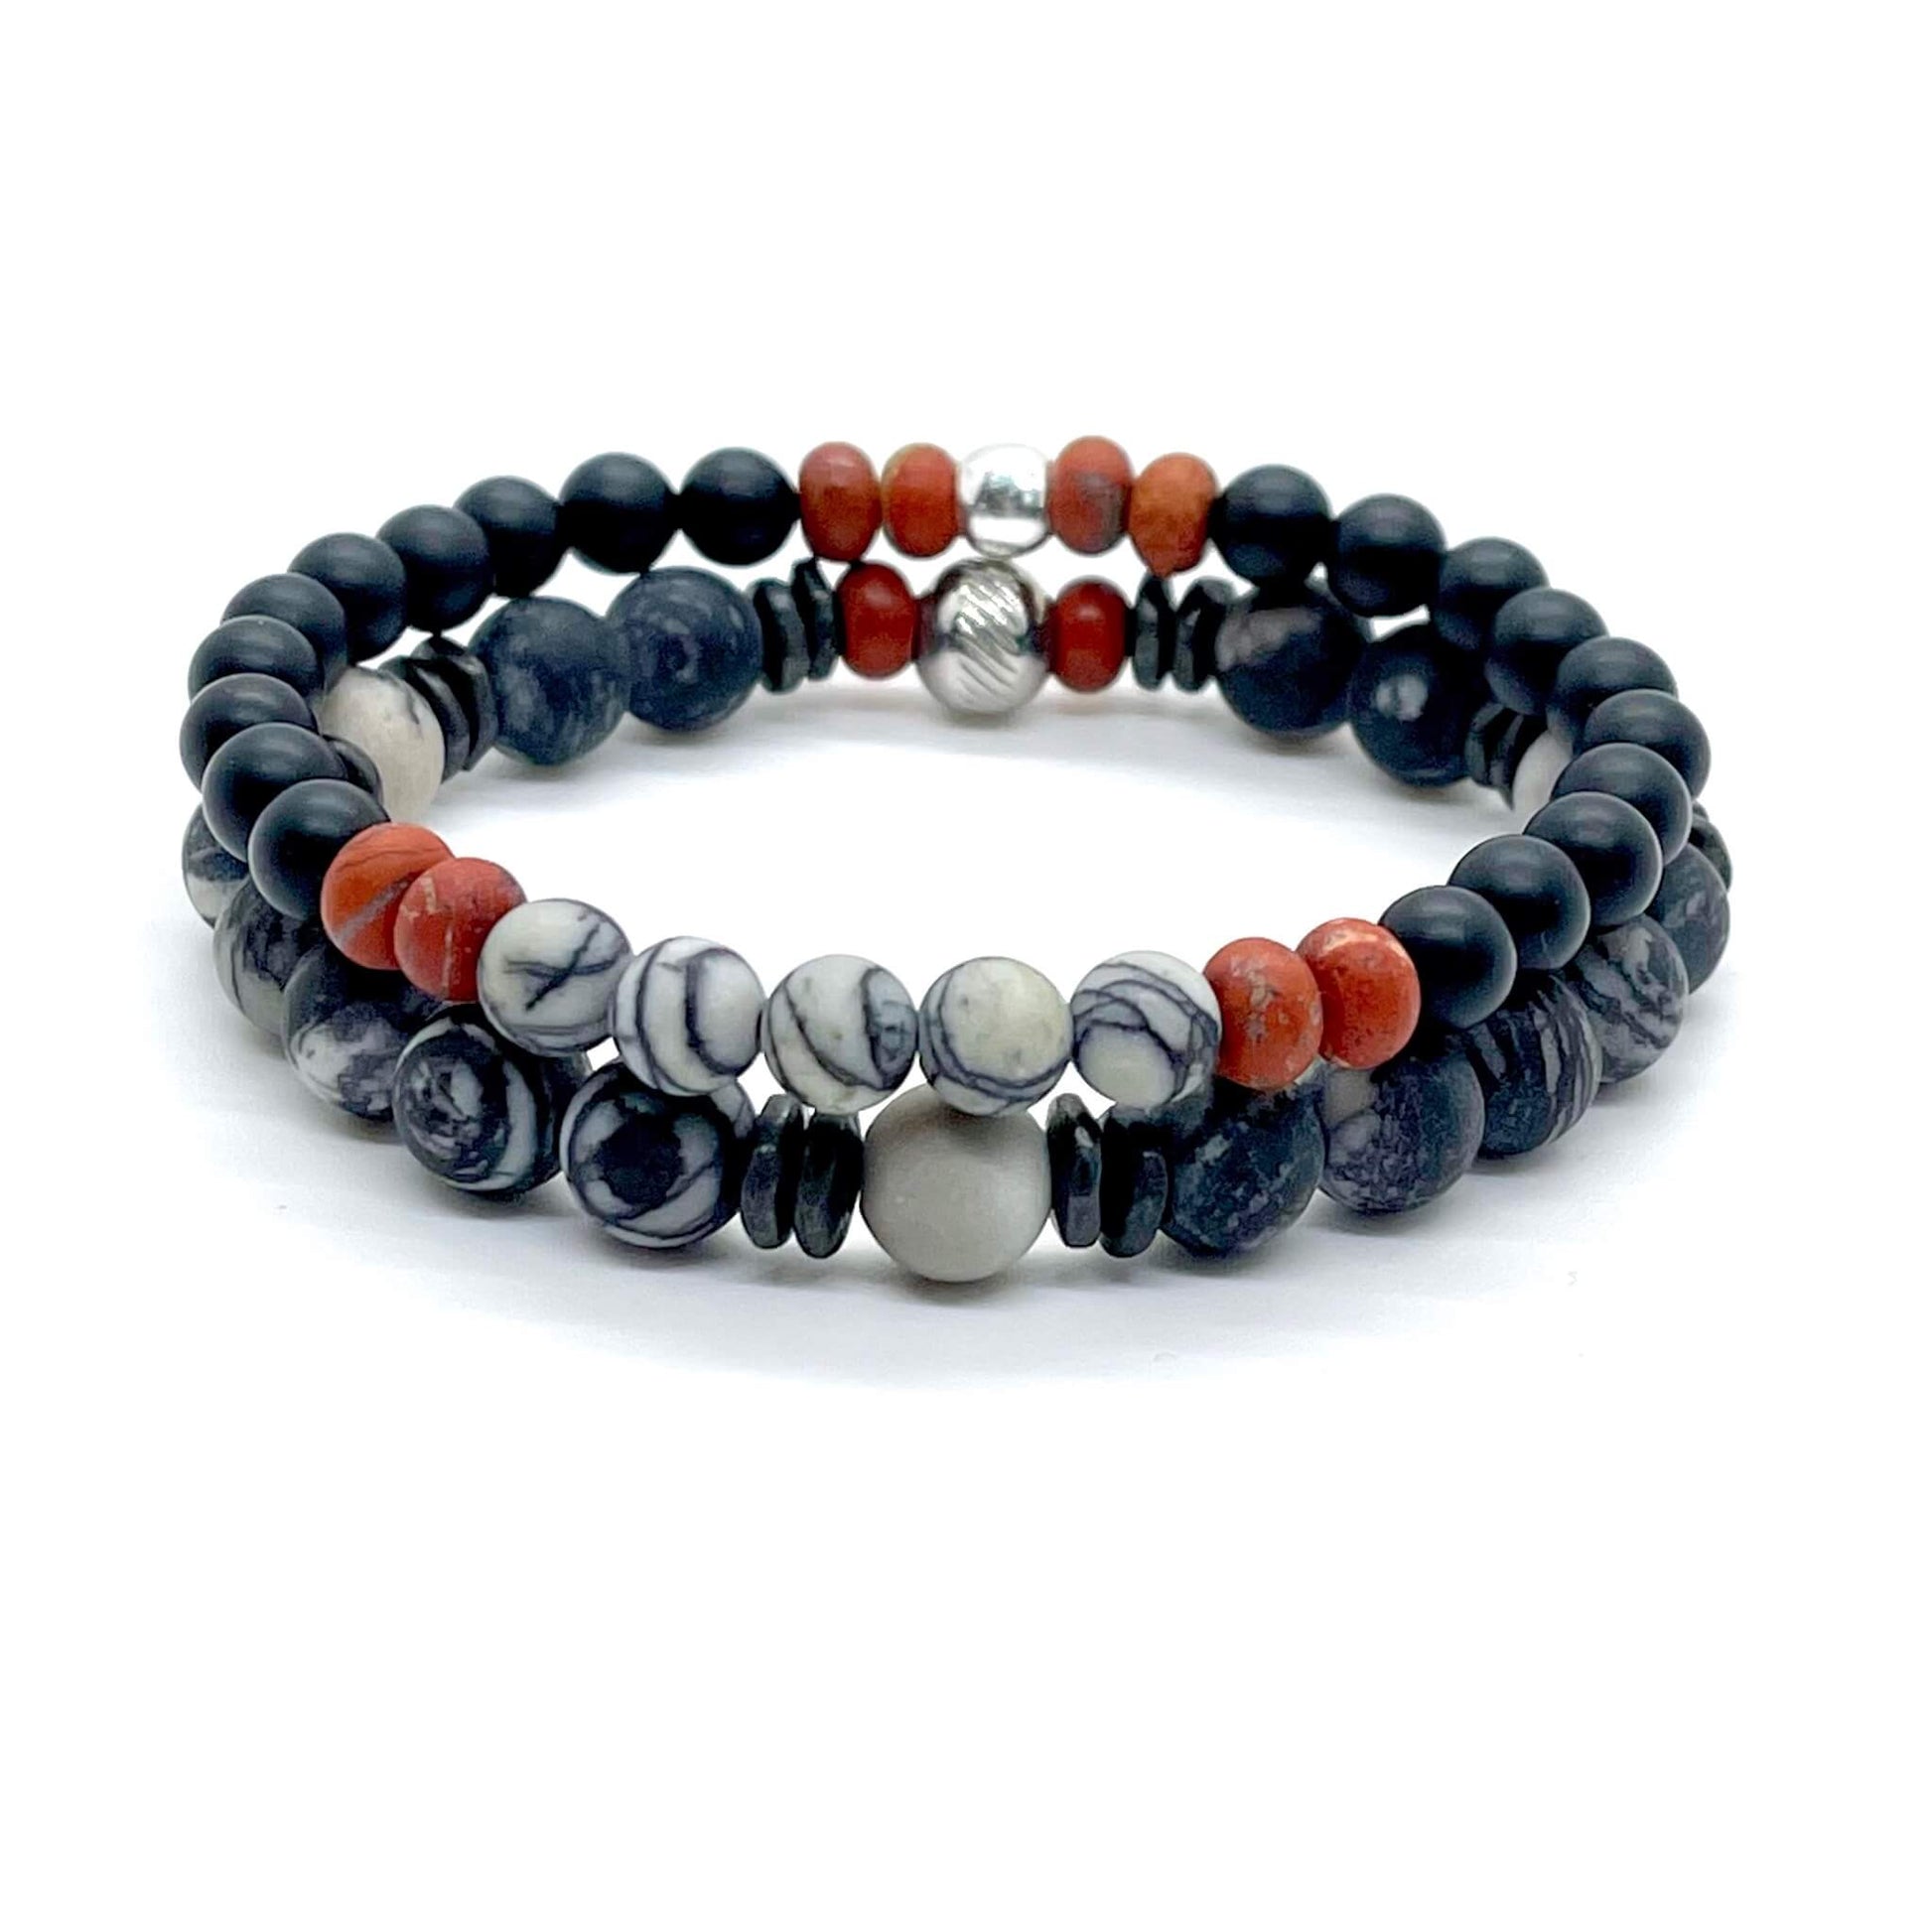 Stylish men's beaded bracelet stack with white, black and red gemstones.